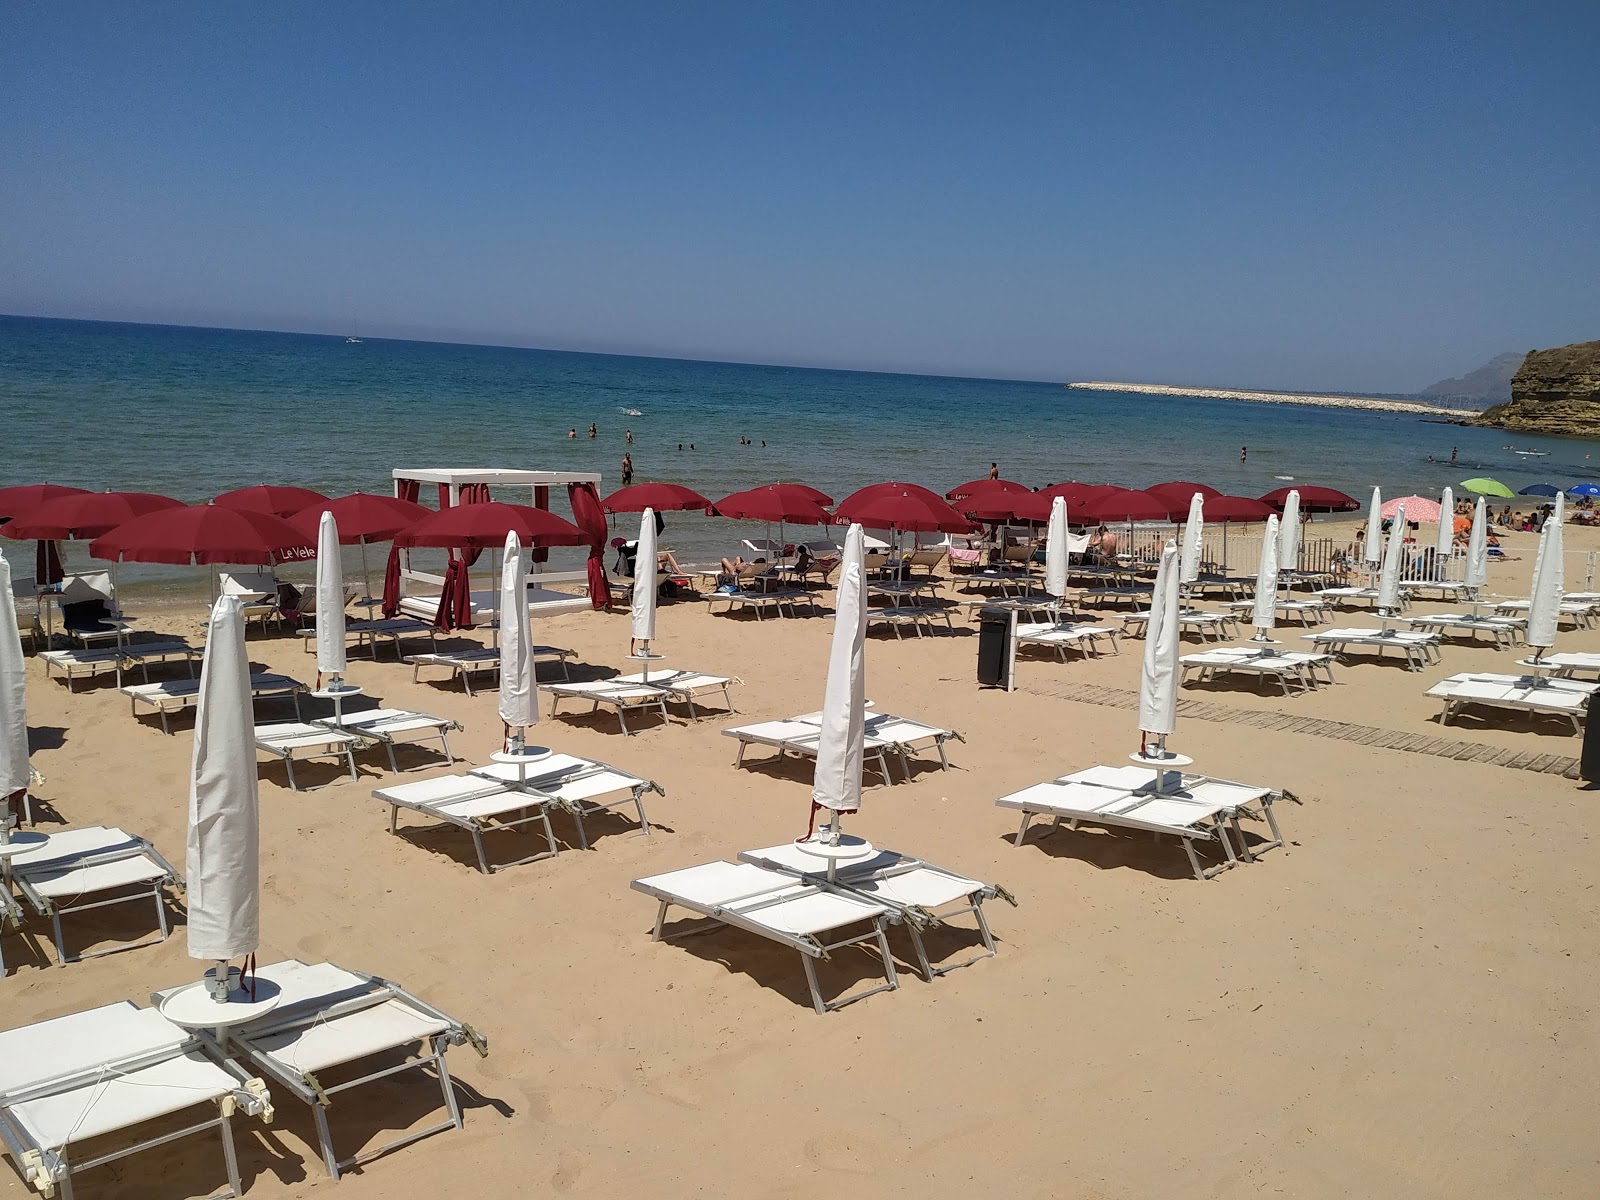 Foto af Spiaggia Di Balestrate med turkis rent vand overflade